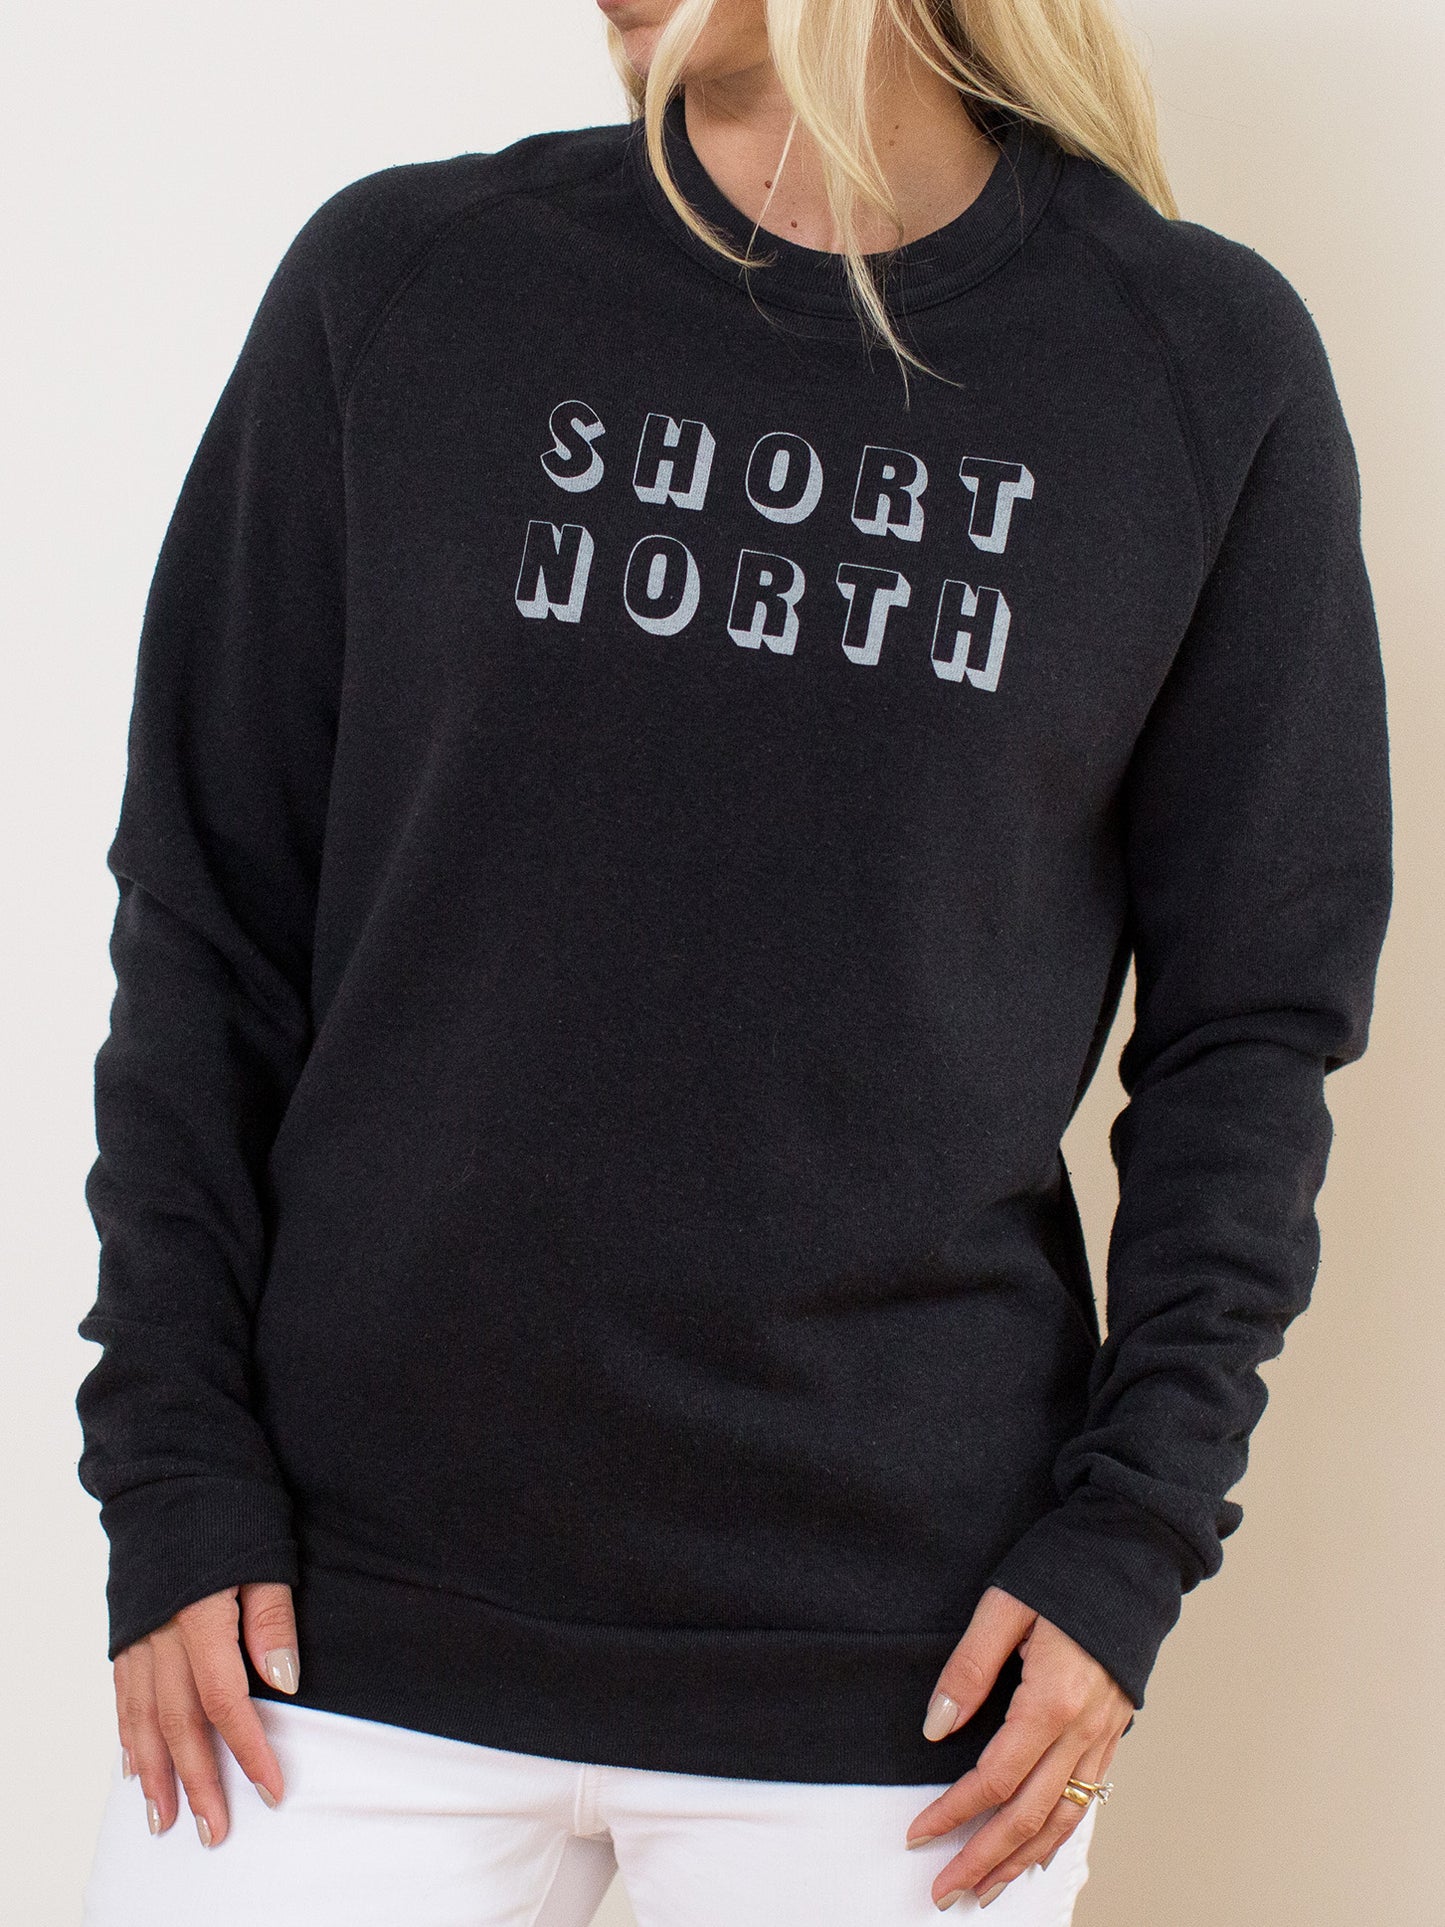 Model wearing black crewneck sweatshirt with Short North Columbus, Ohio graphic at front